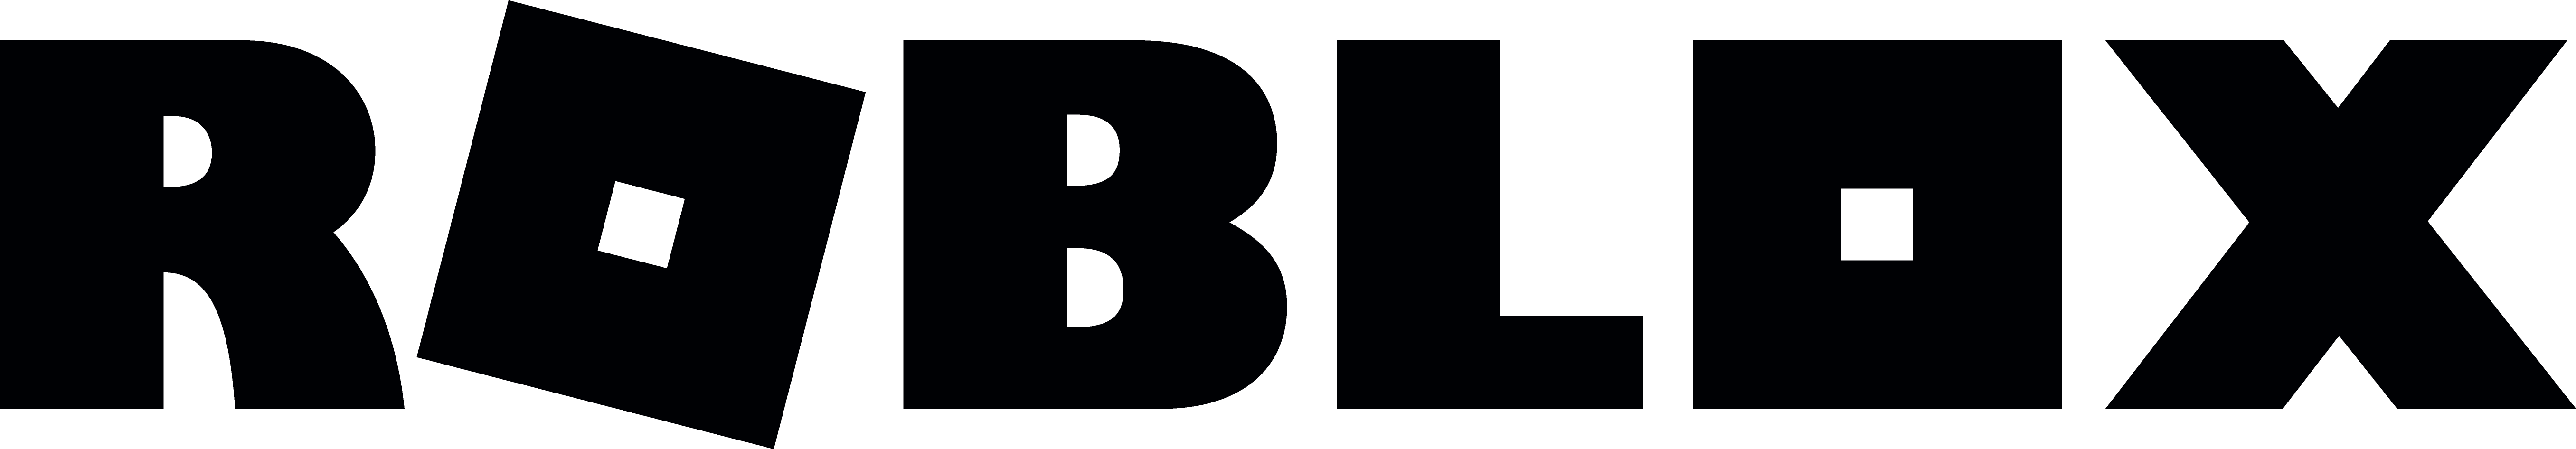 Logo-Roblox-Negro-Full.png